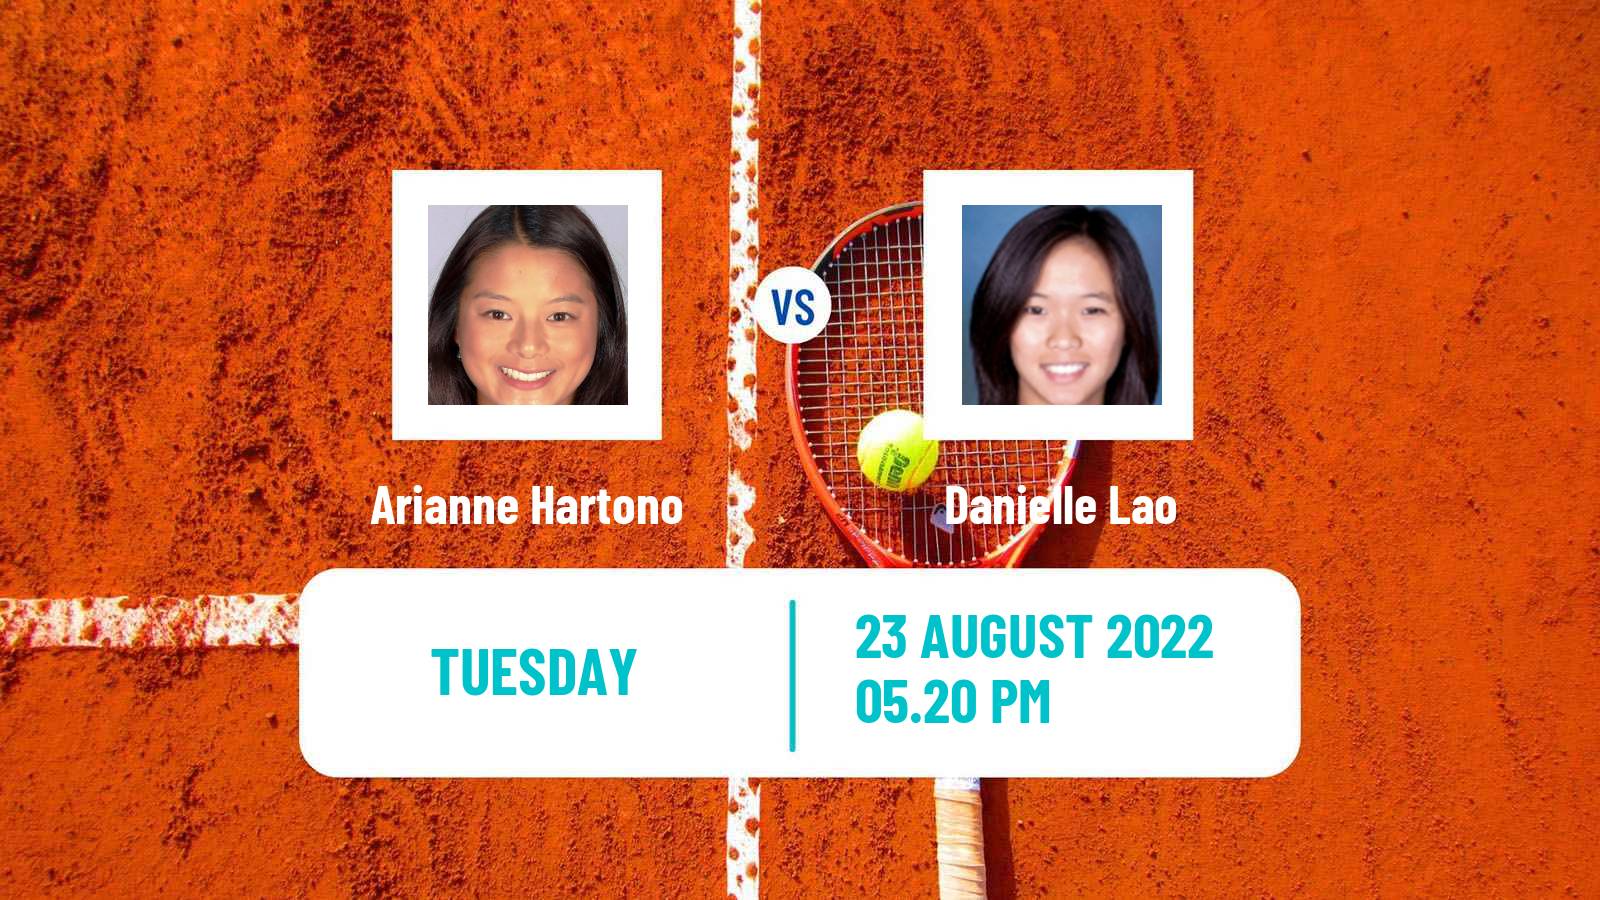 Tennis WTA US Open Arianne Hartono - Danielle Lao